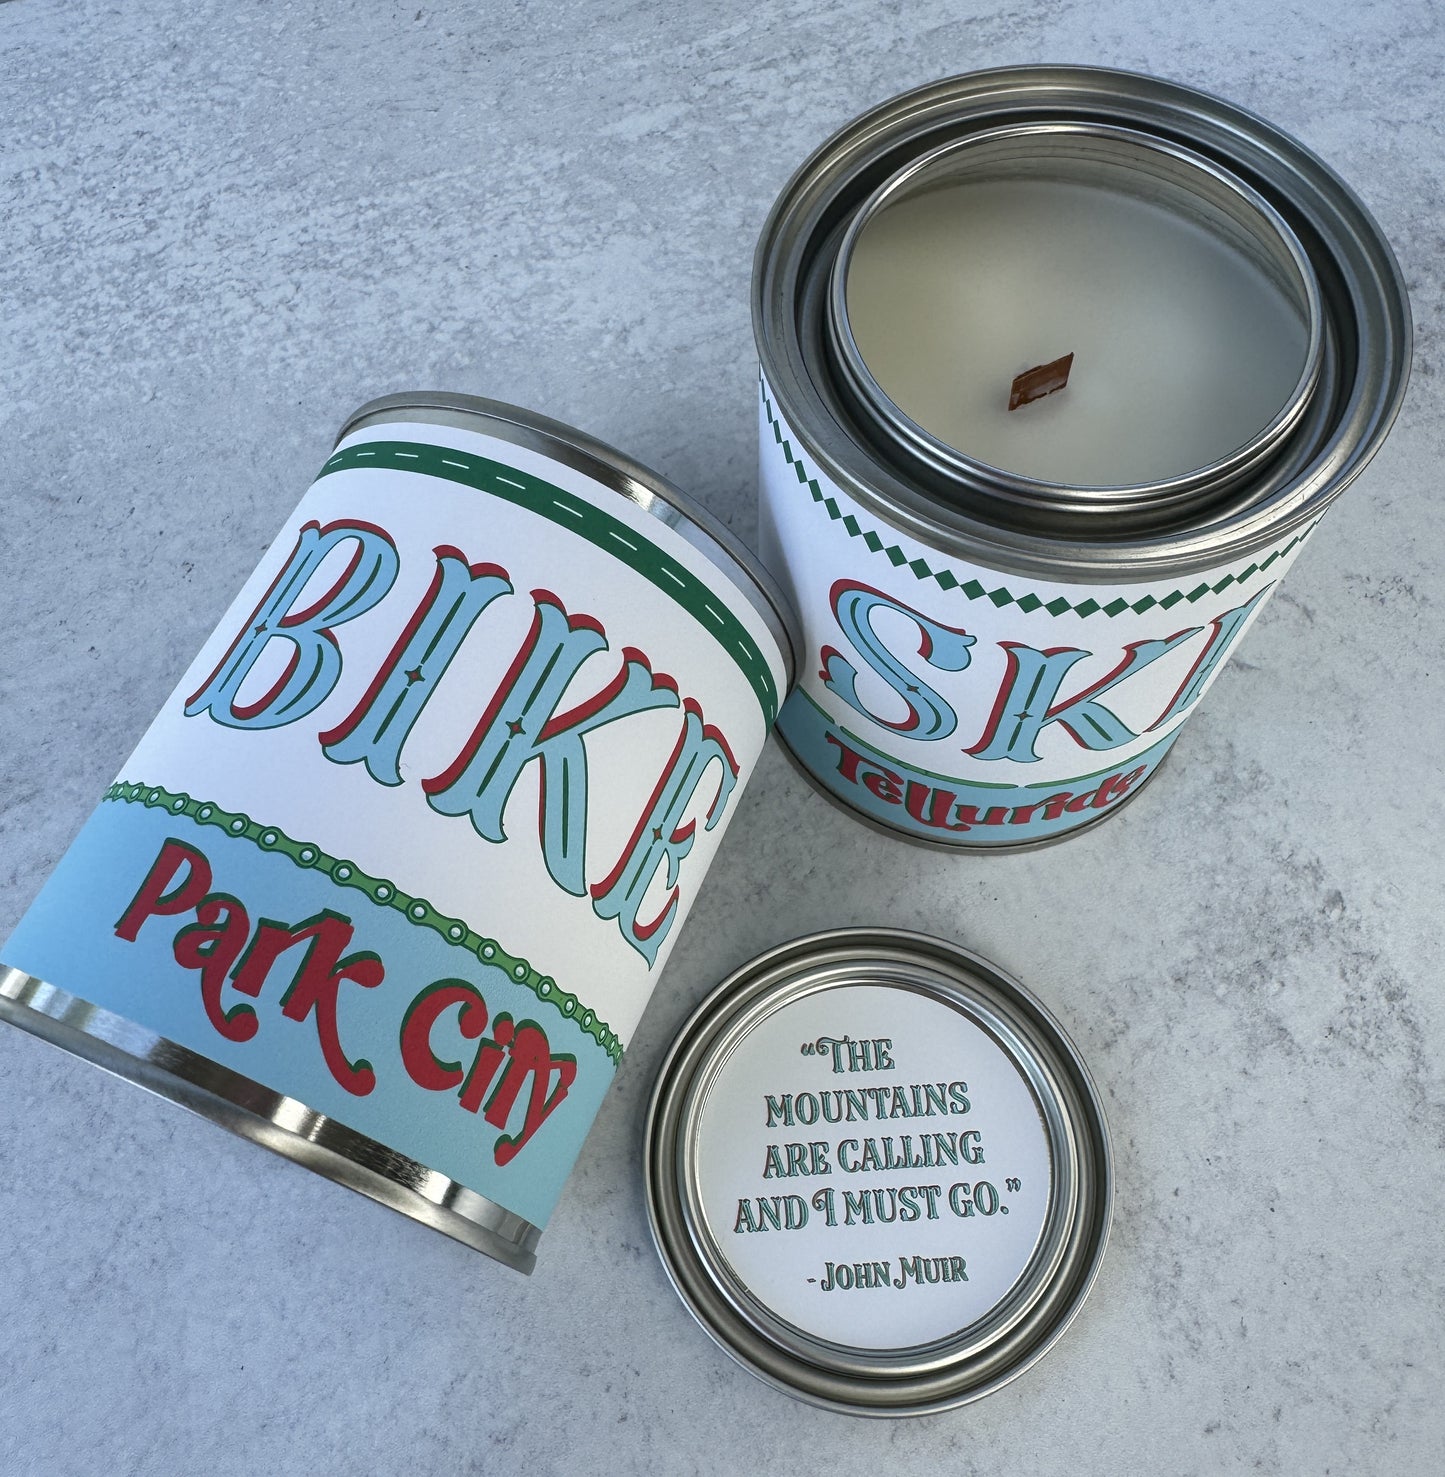 Bike Mountain High - Paint Tin Candle